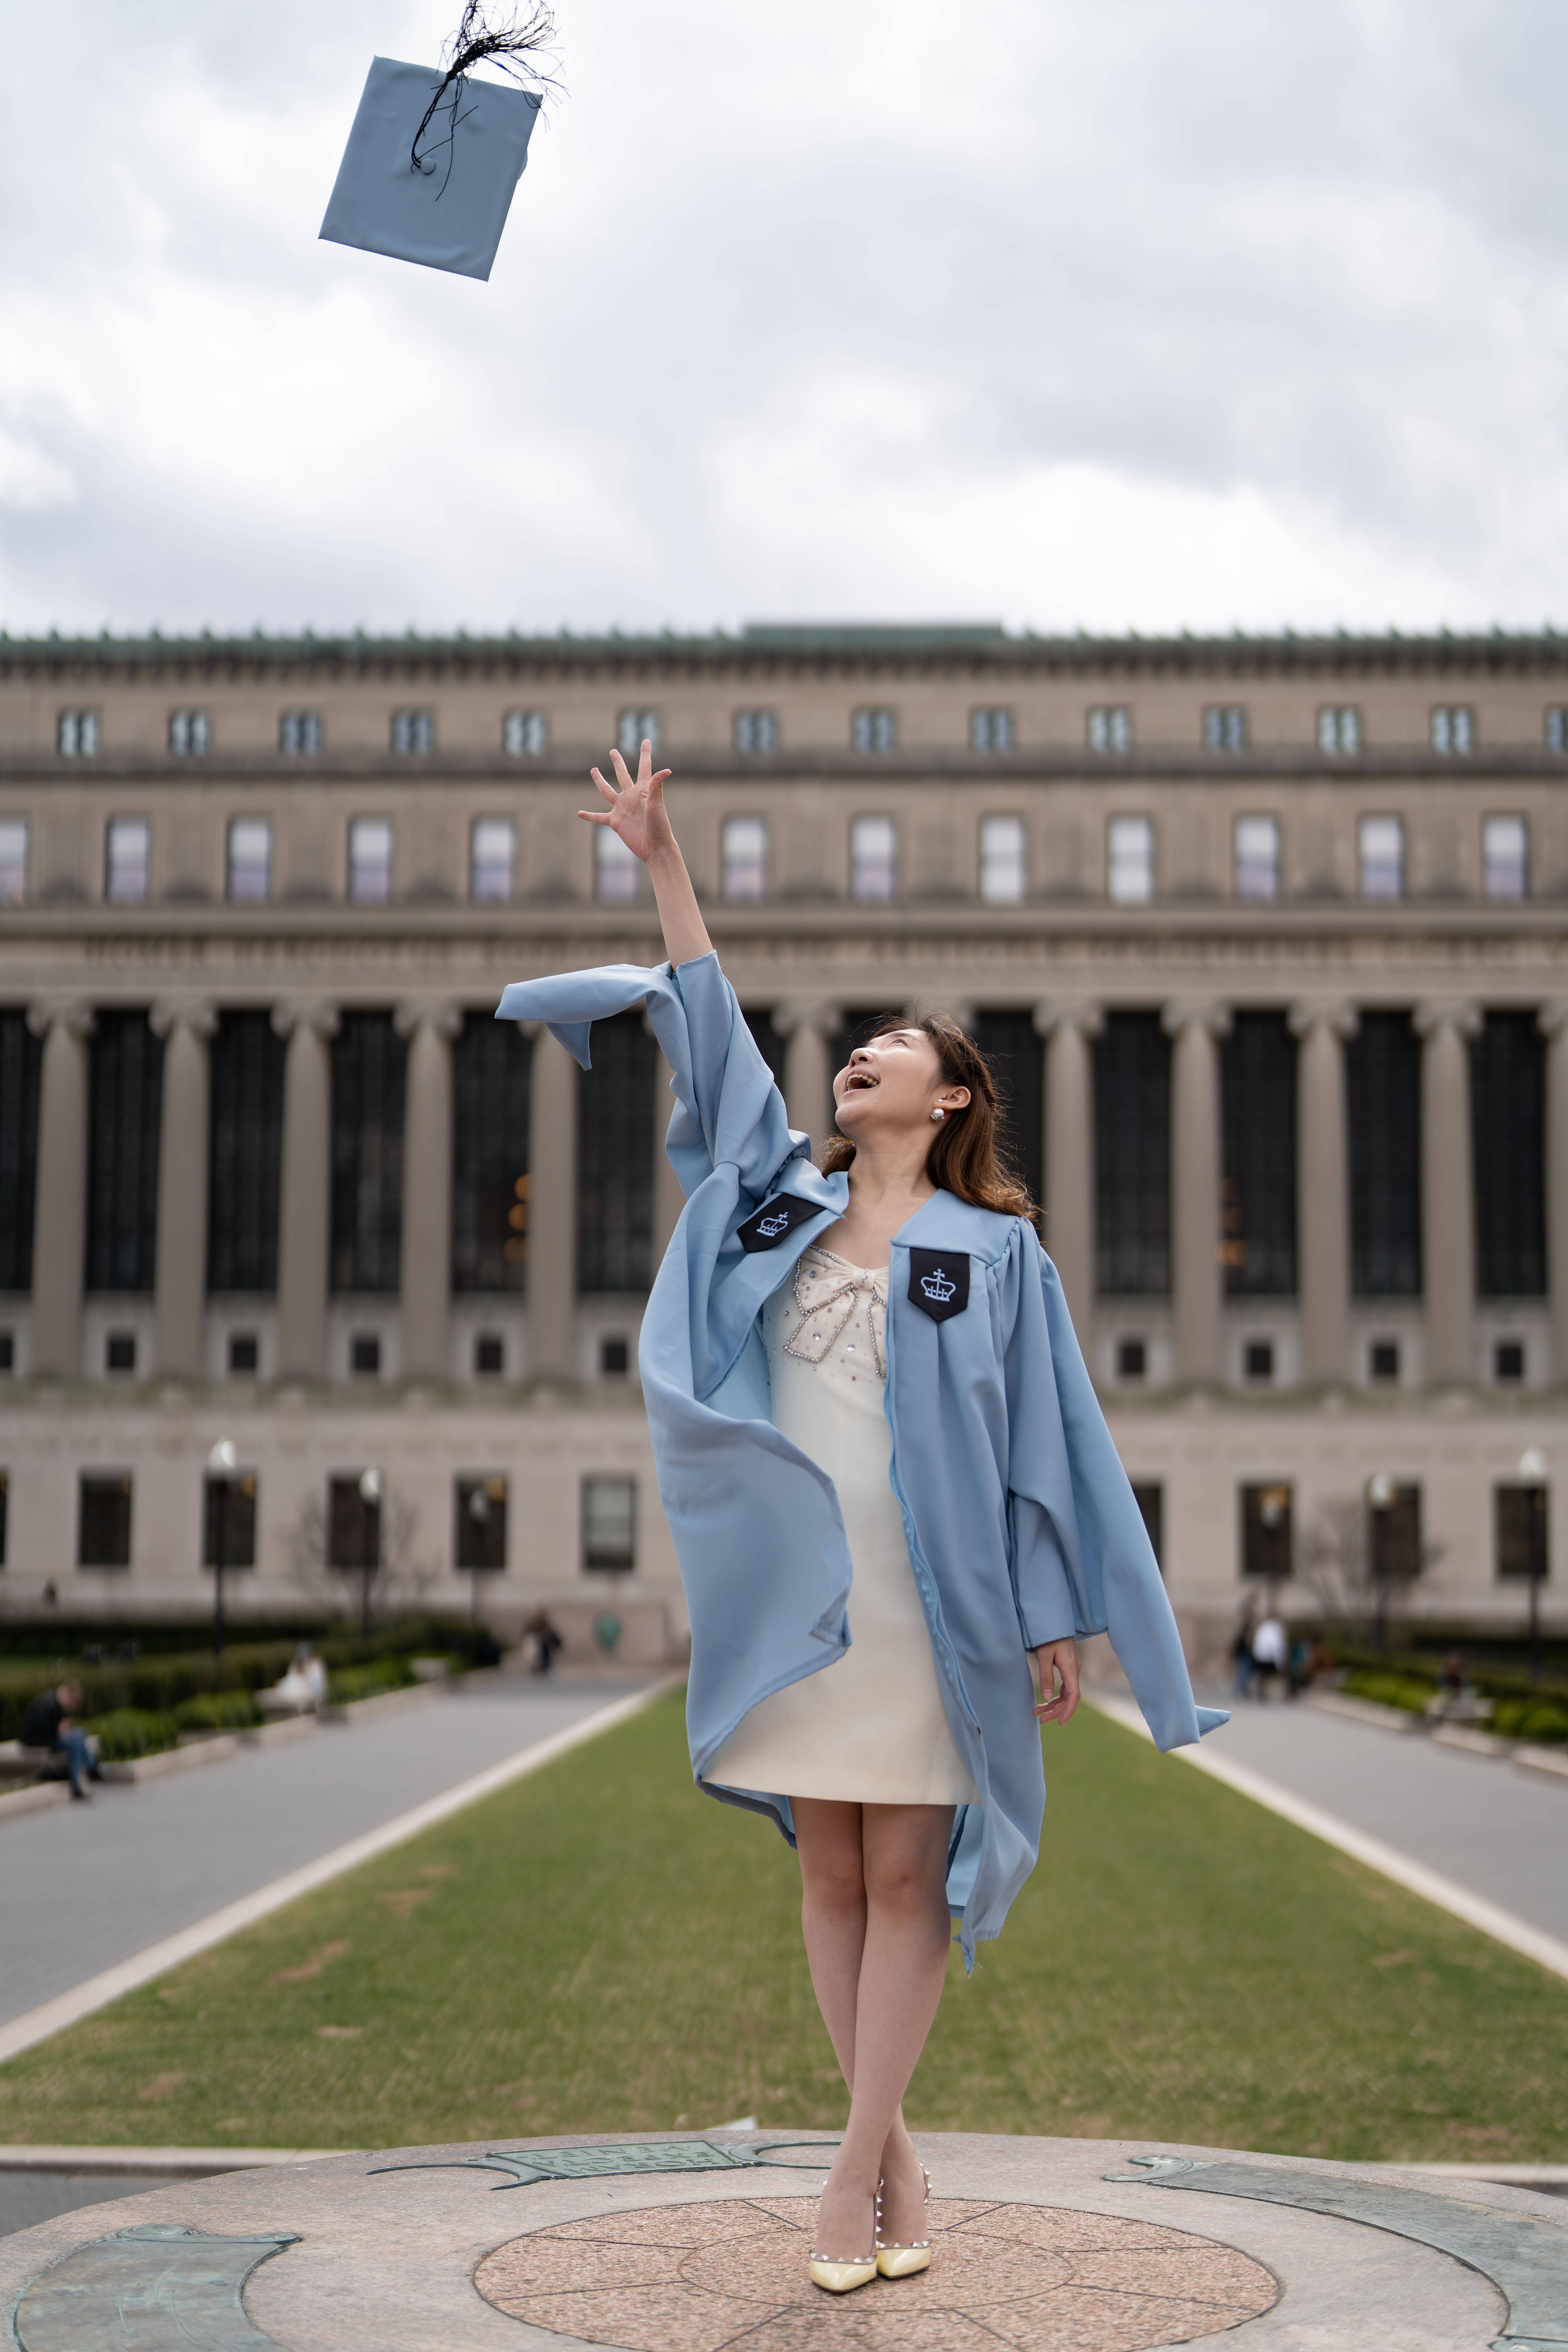 Columbia University: An MA in Economics that unlocks academic and professional success